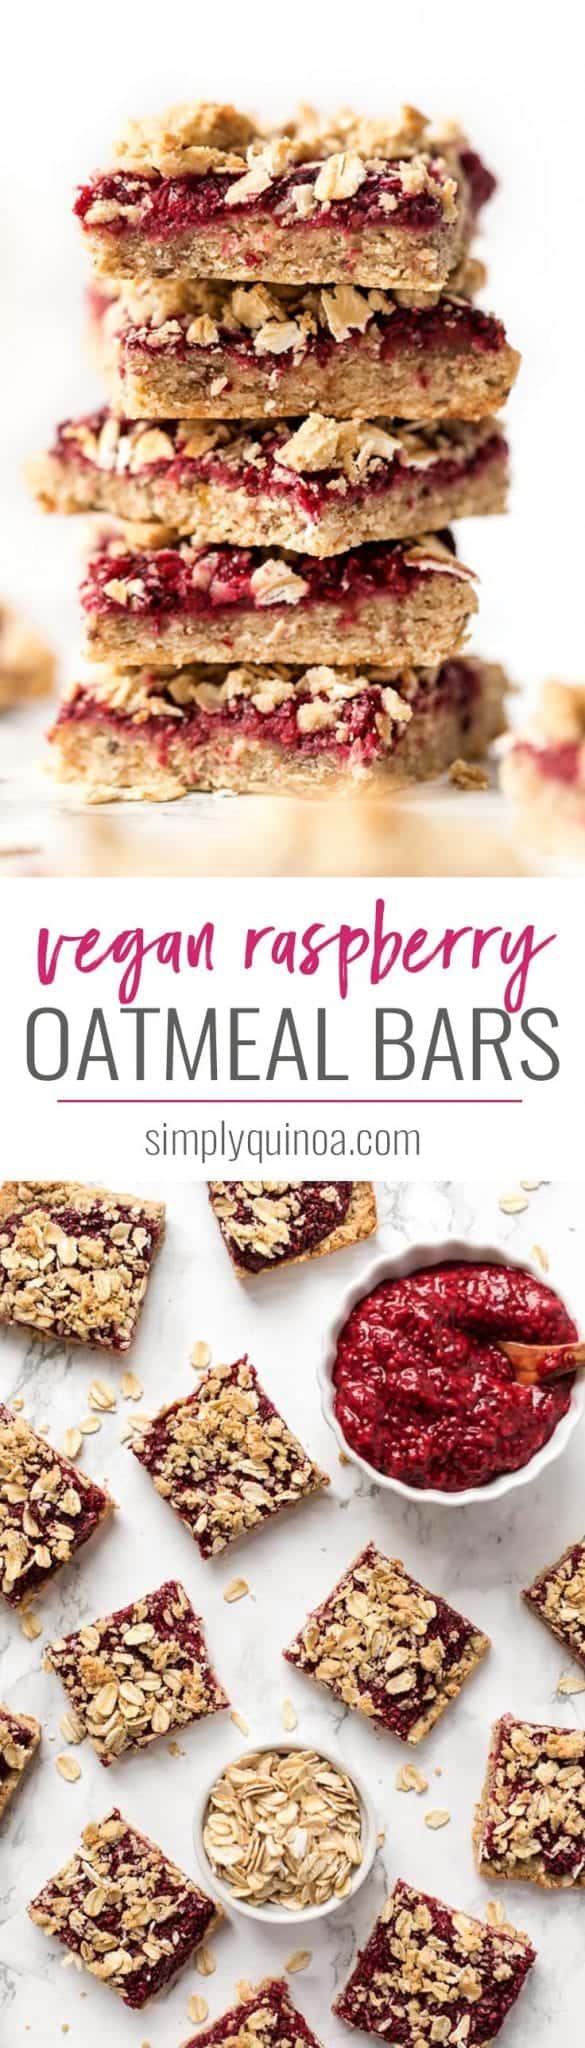 vegan raspberry oatmeal bars with oats and almond flour